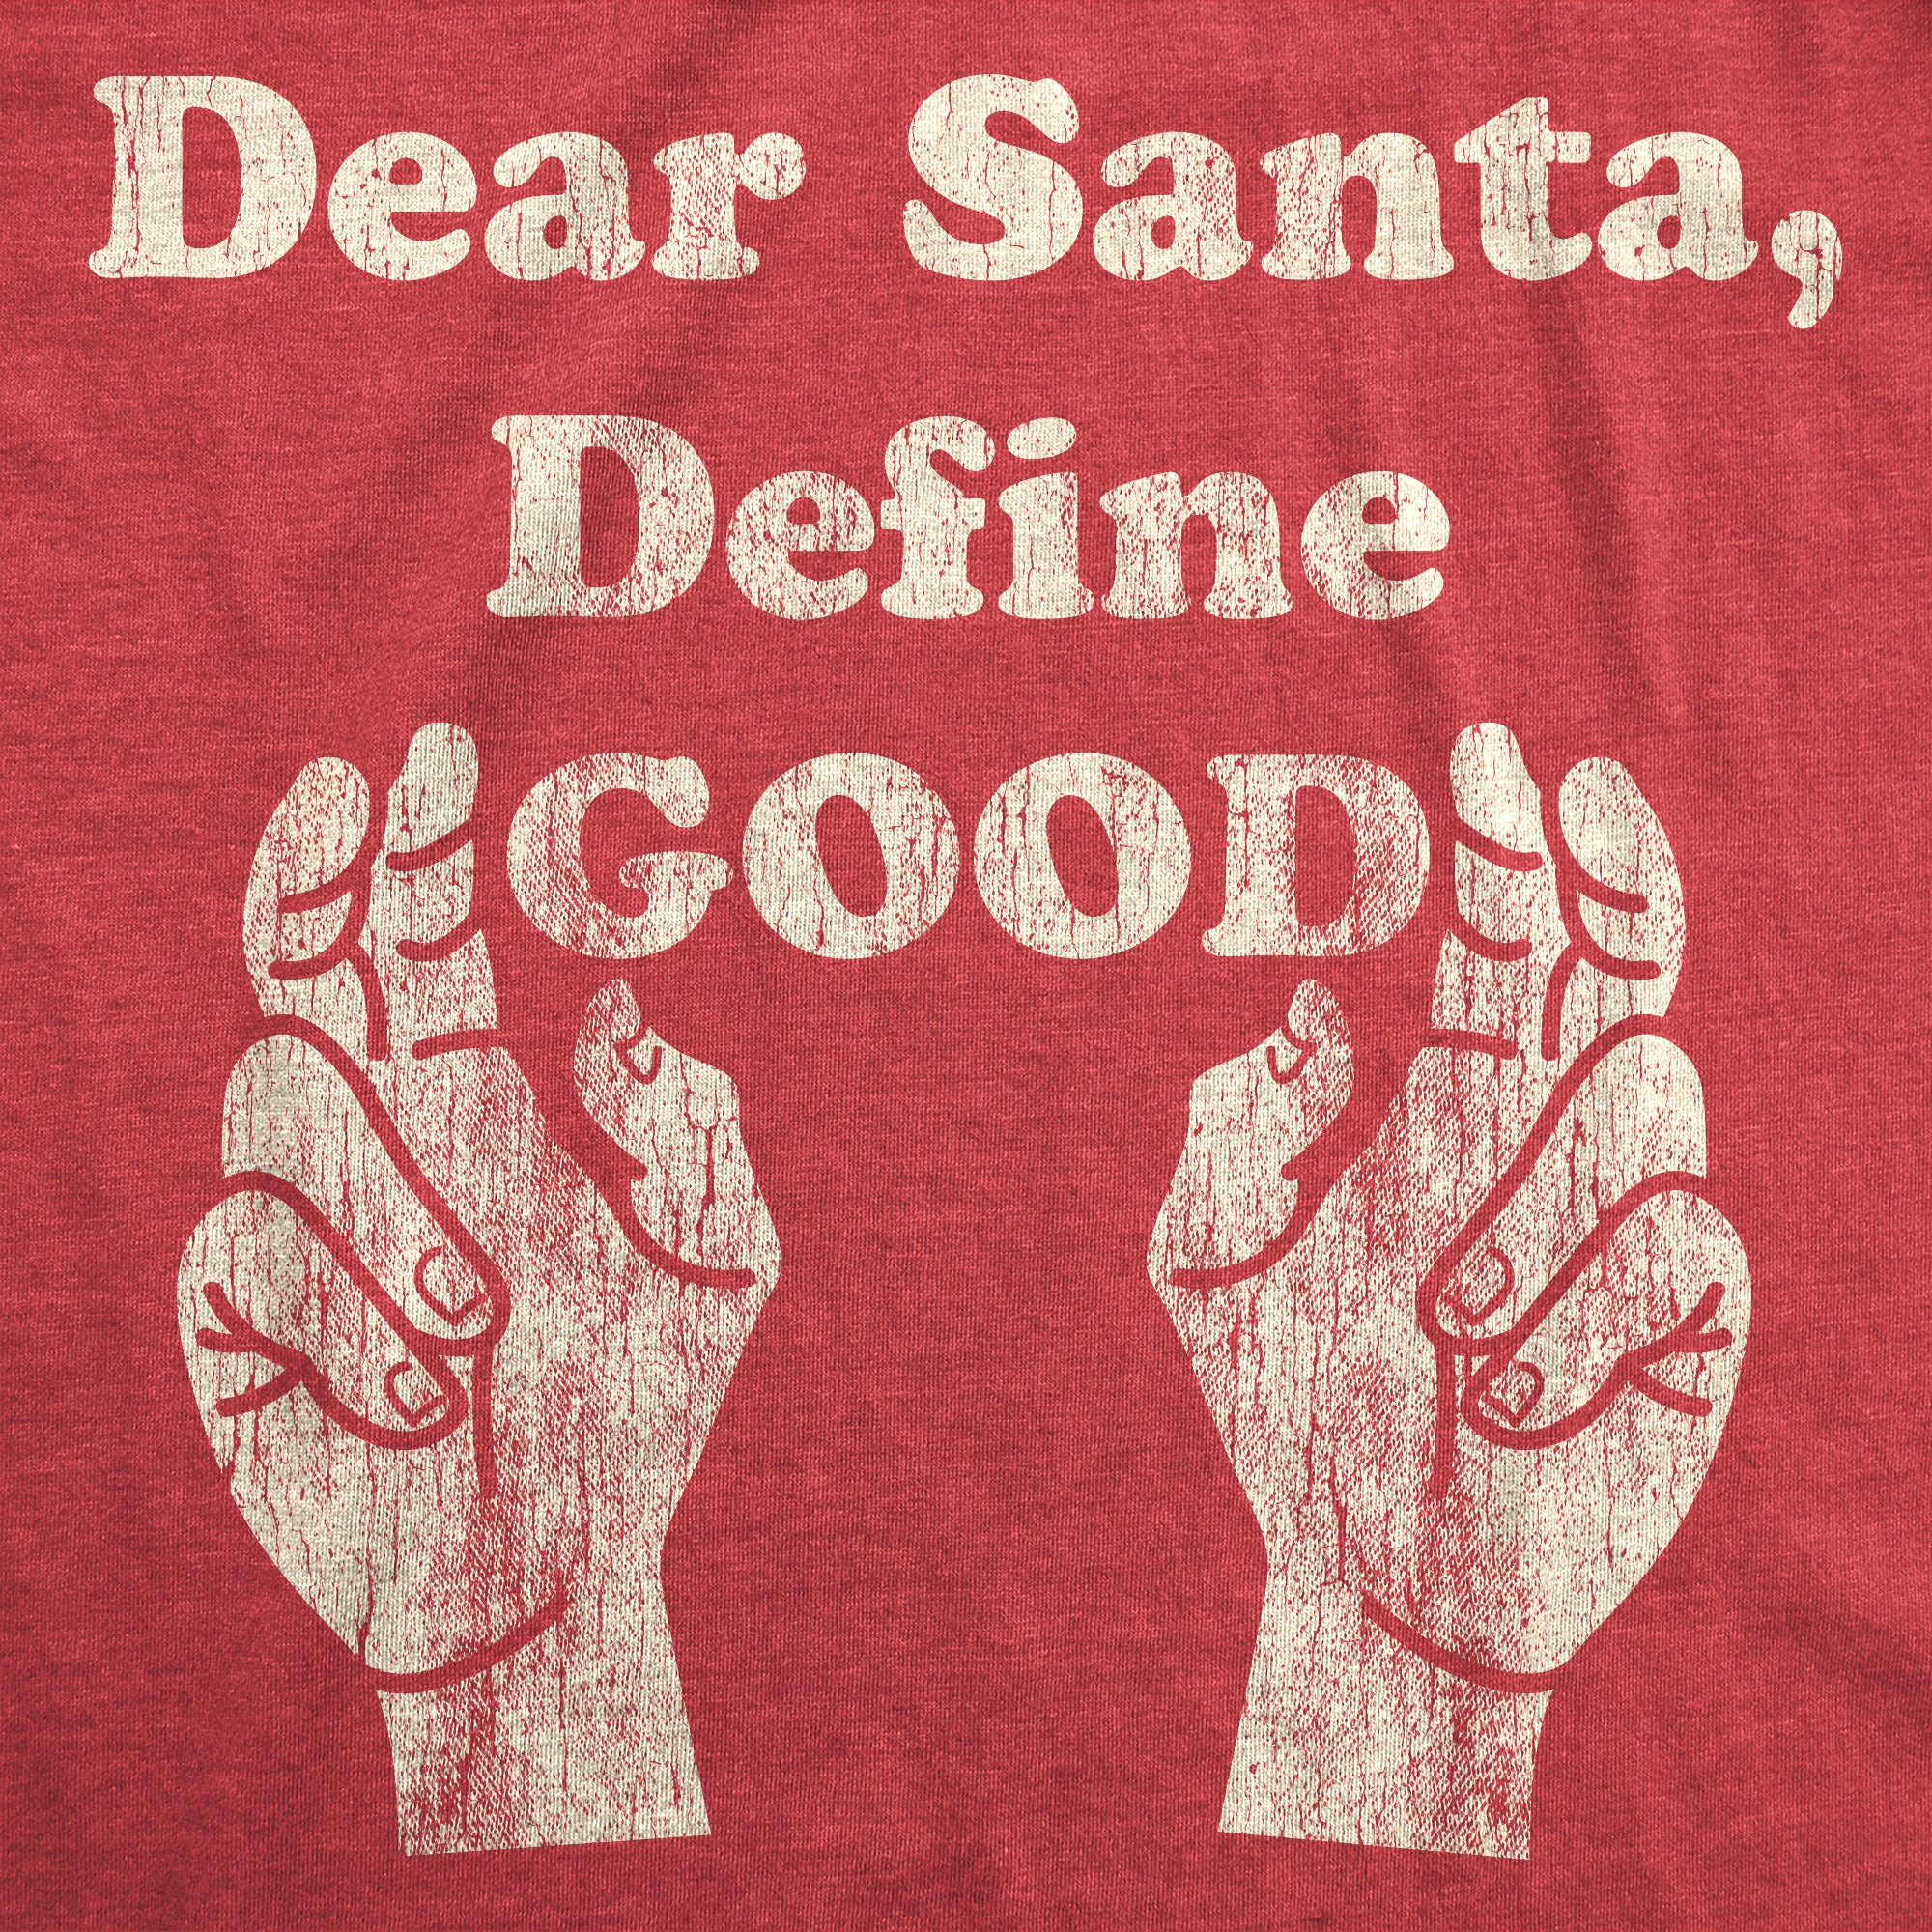 Funny Heather Red - Define Good Dear Santa Define Good Womens T Shirt Nerdy Christmas Sex Tee